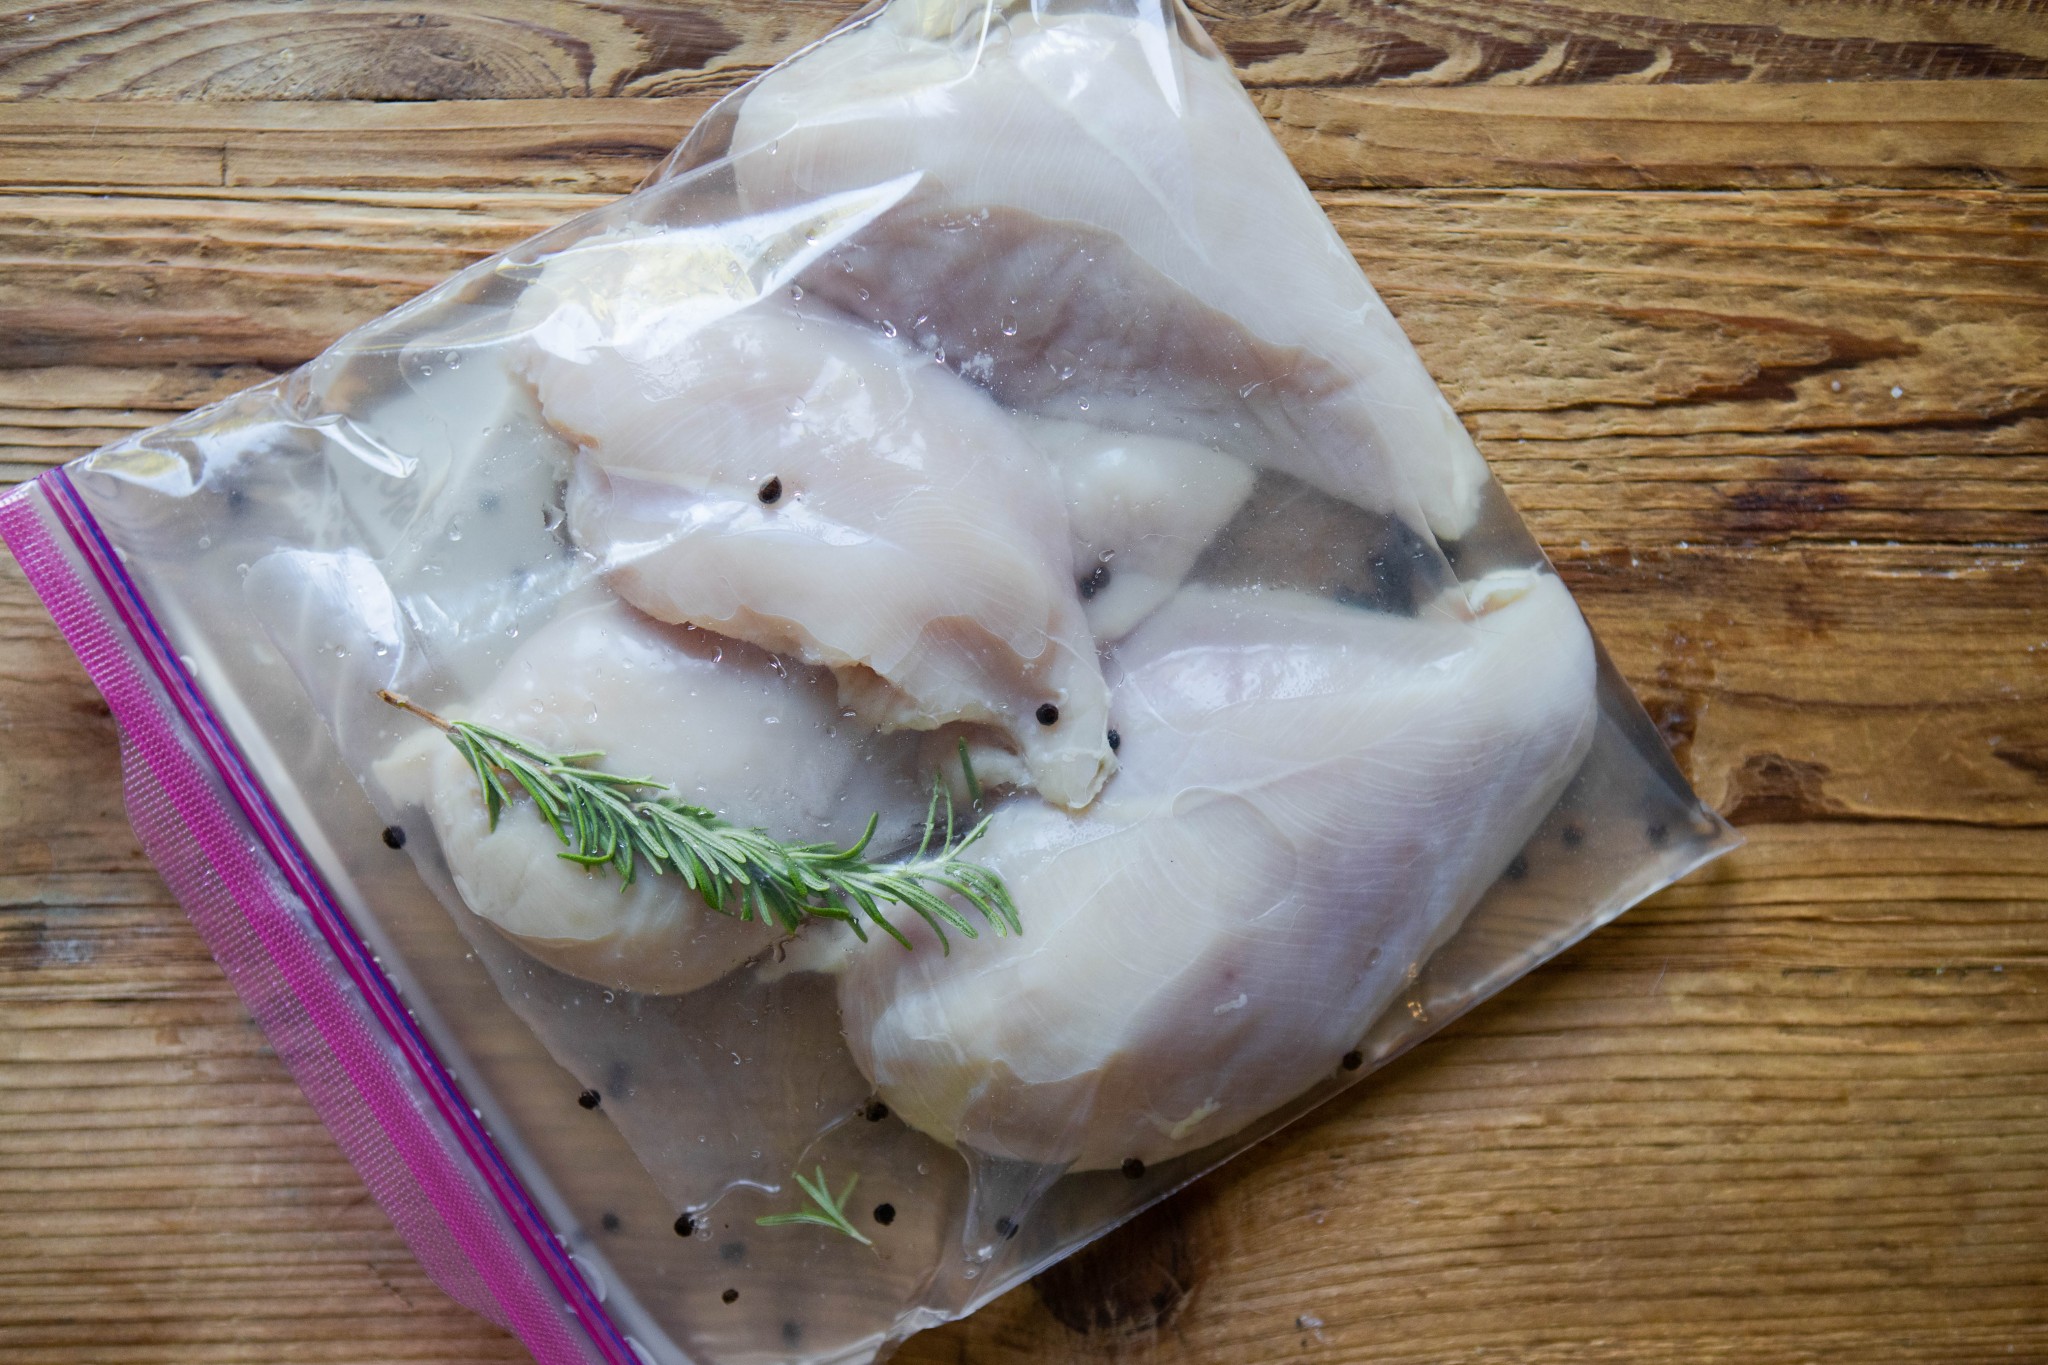 chicken breasts soaking in a a basic salt brine in a Ziploc bag